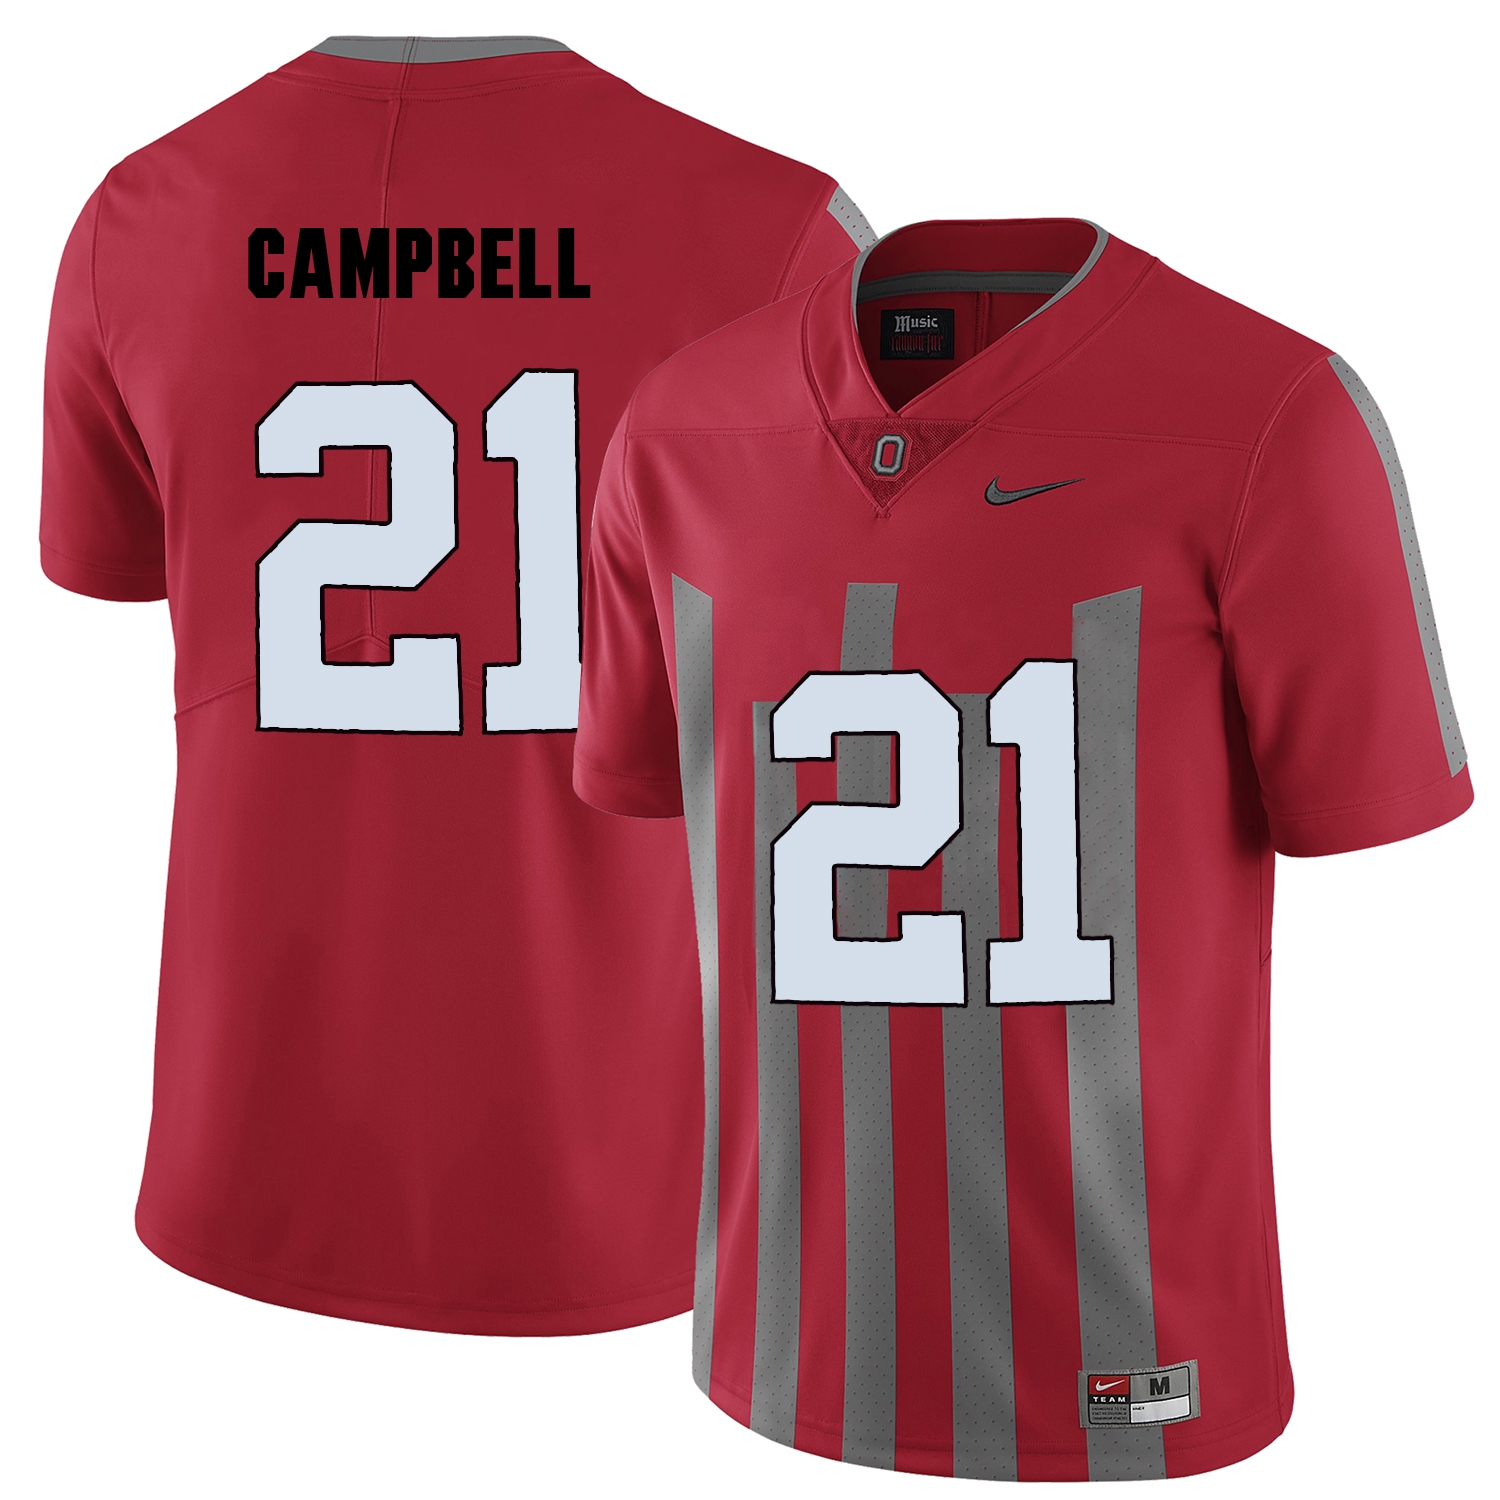 Ohio State Buckeyes Men's NCAA Parris Campbell #21 Red Elite College Football Jersey AJI7849MV